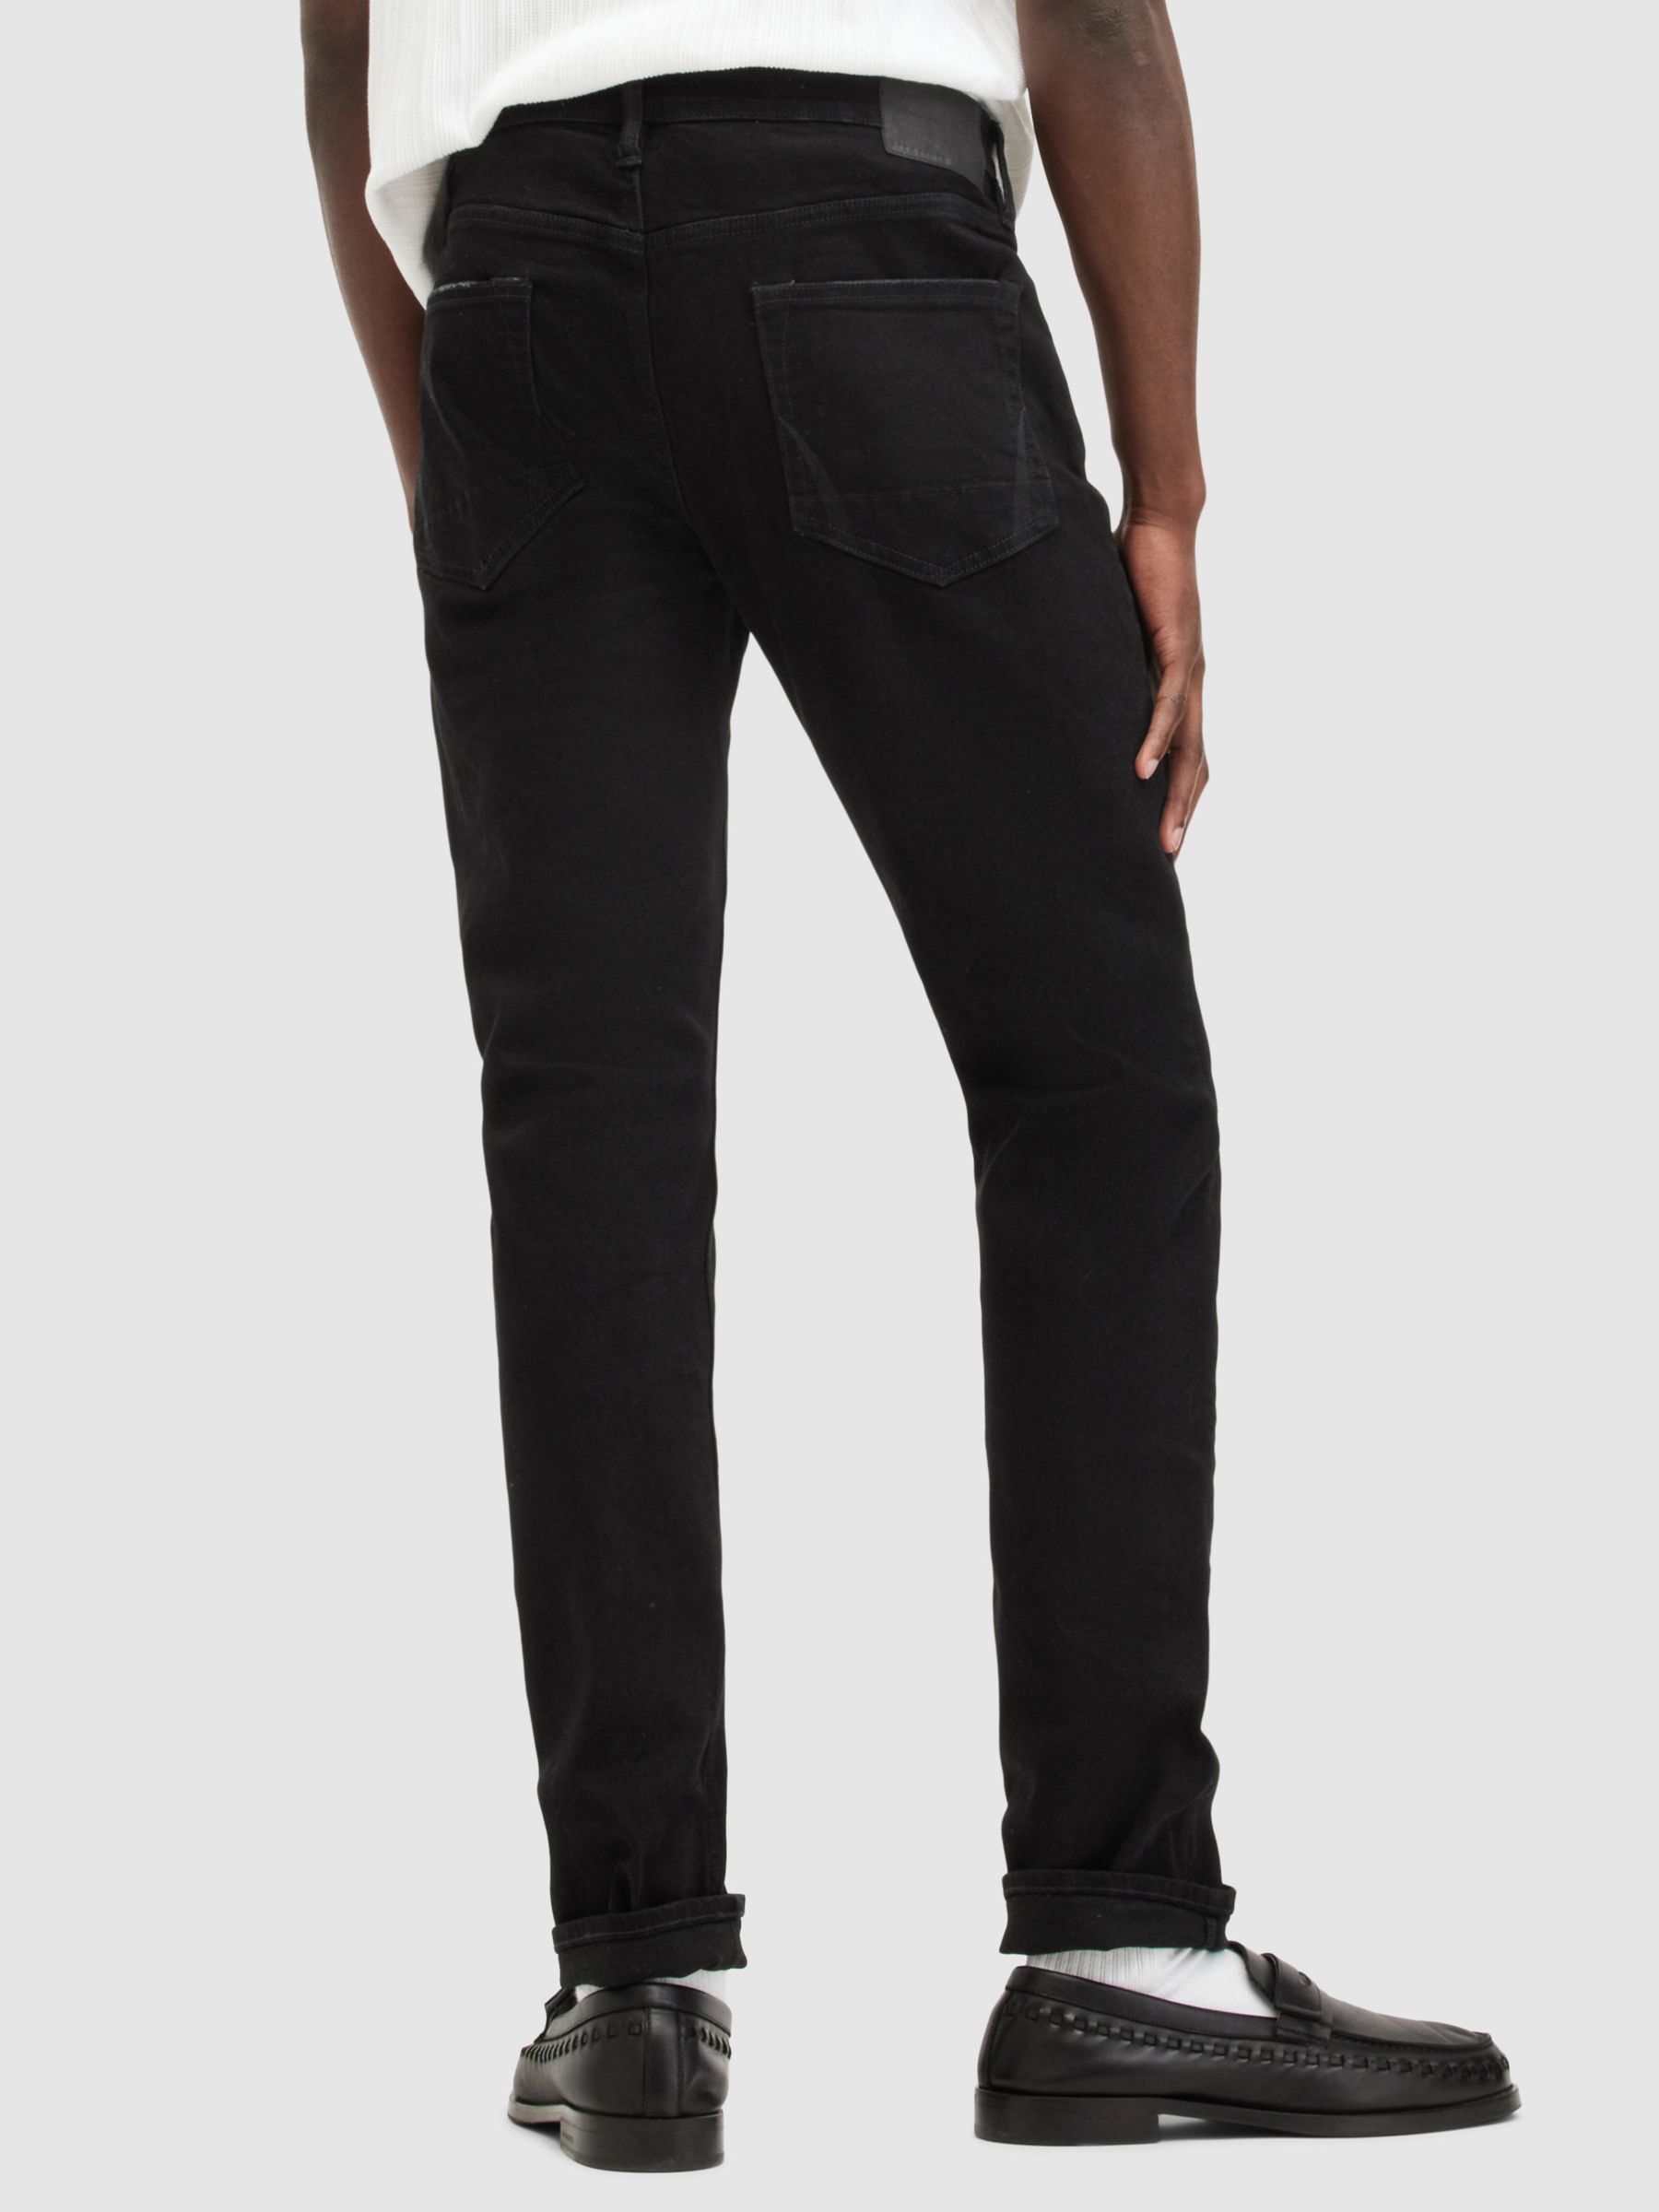 AllSaints Cigarette Slim Jeans, Jet Black, W34/L32